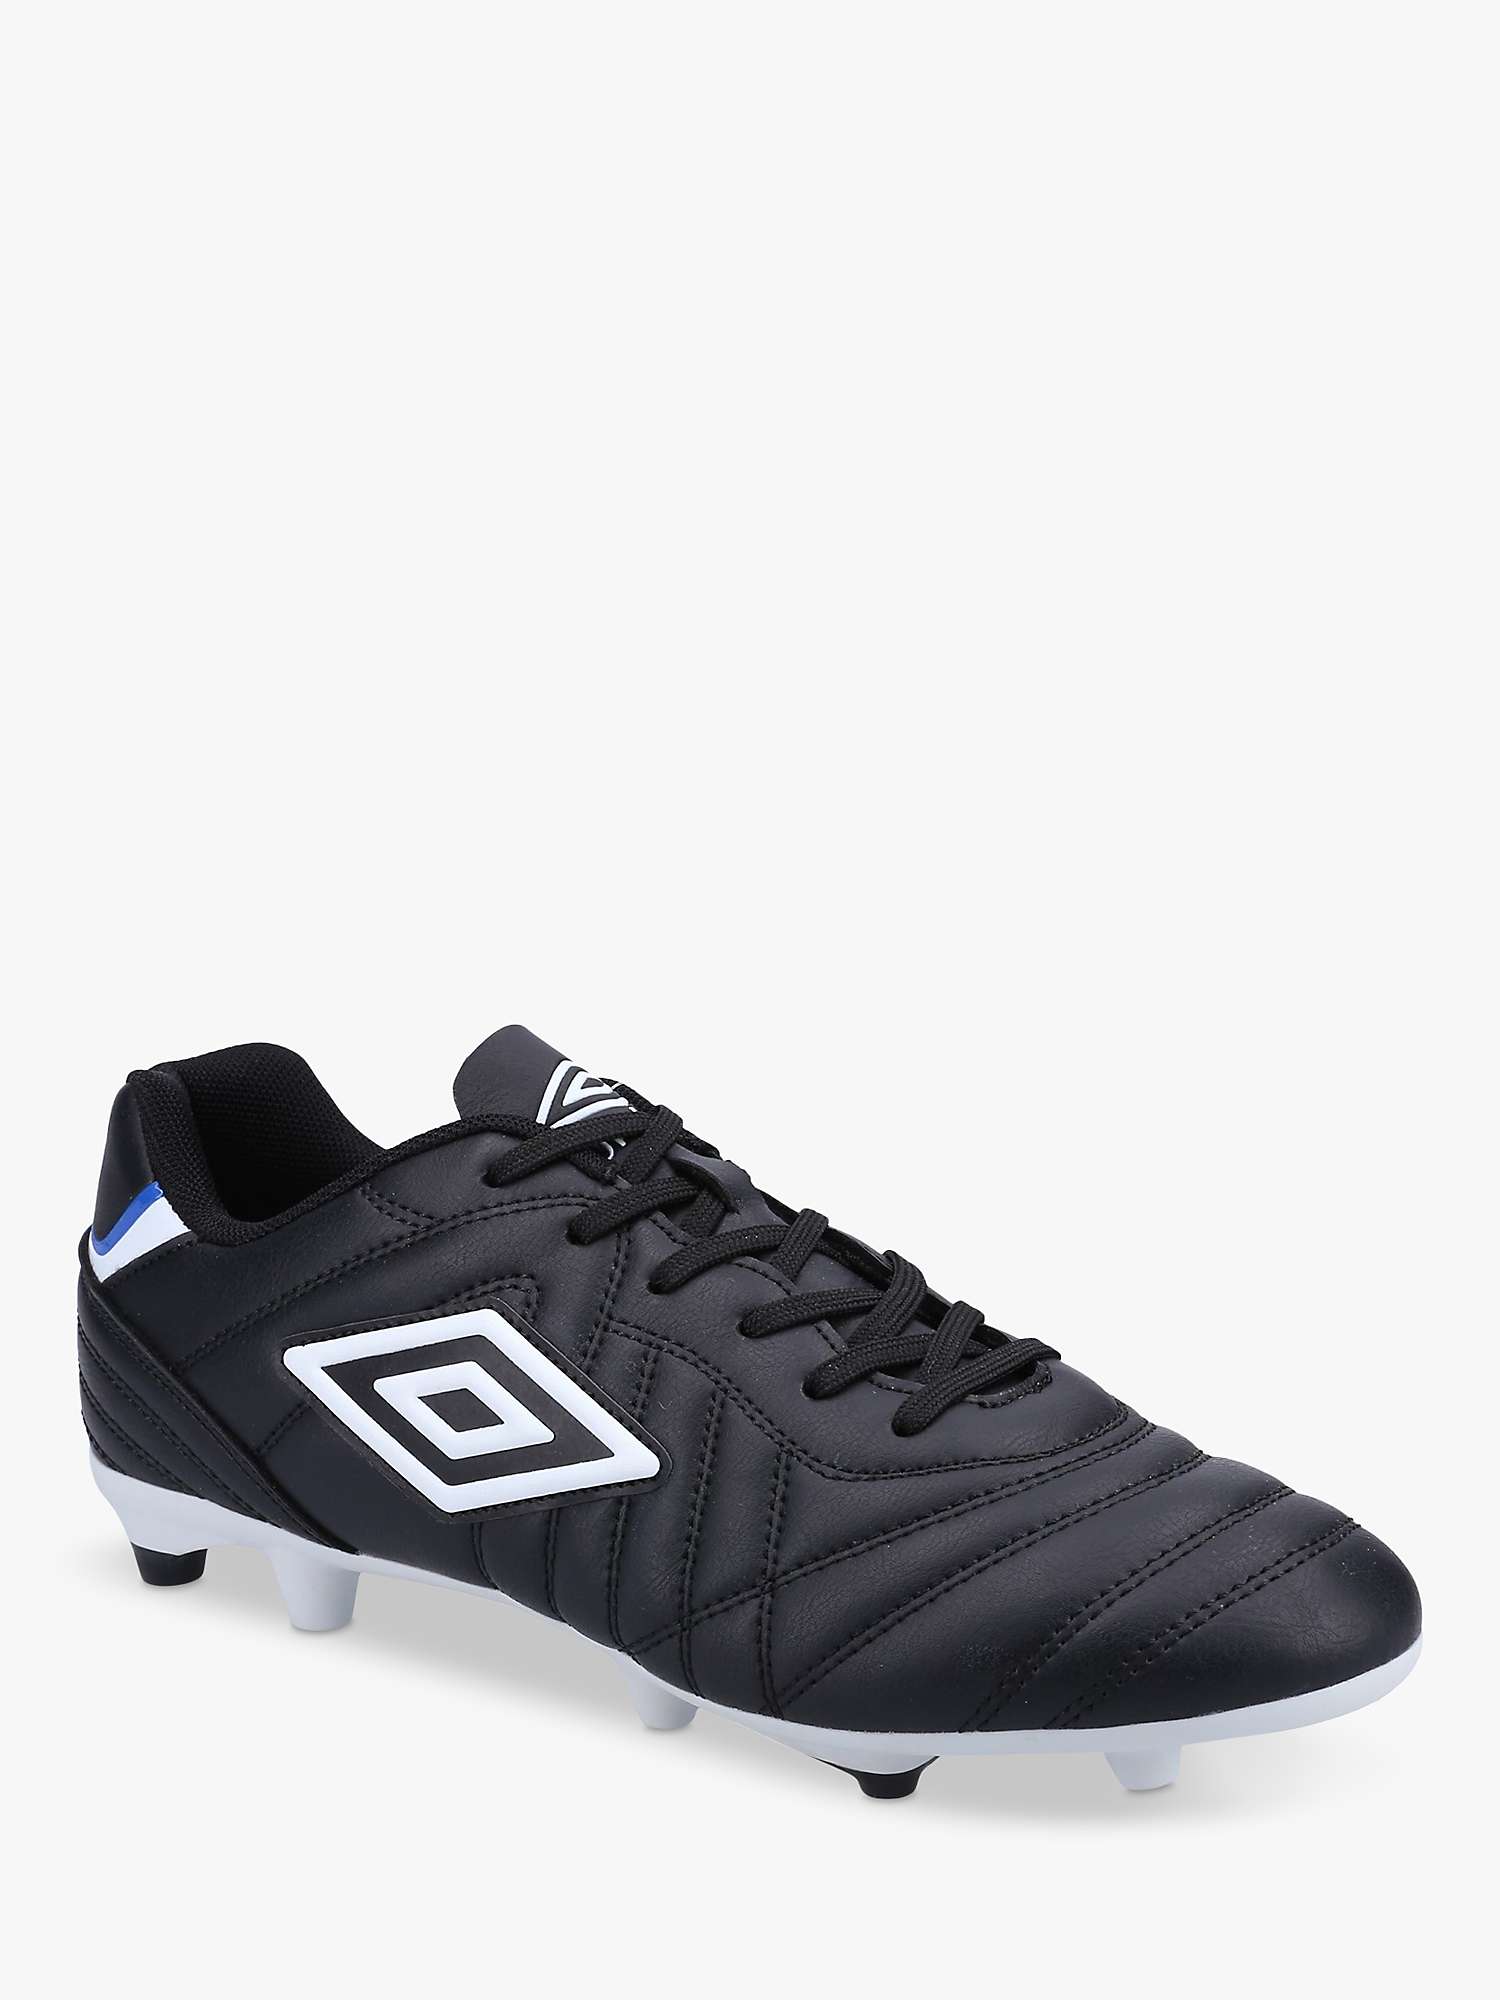 Buy Umbro Speciali Liga Firm Ground Football Boots, Black Online at johnlewis.com